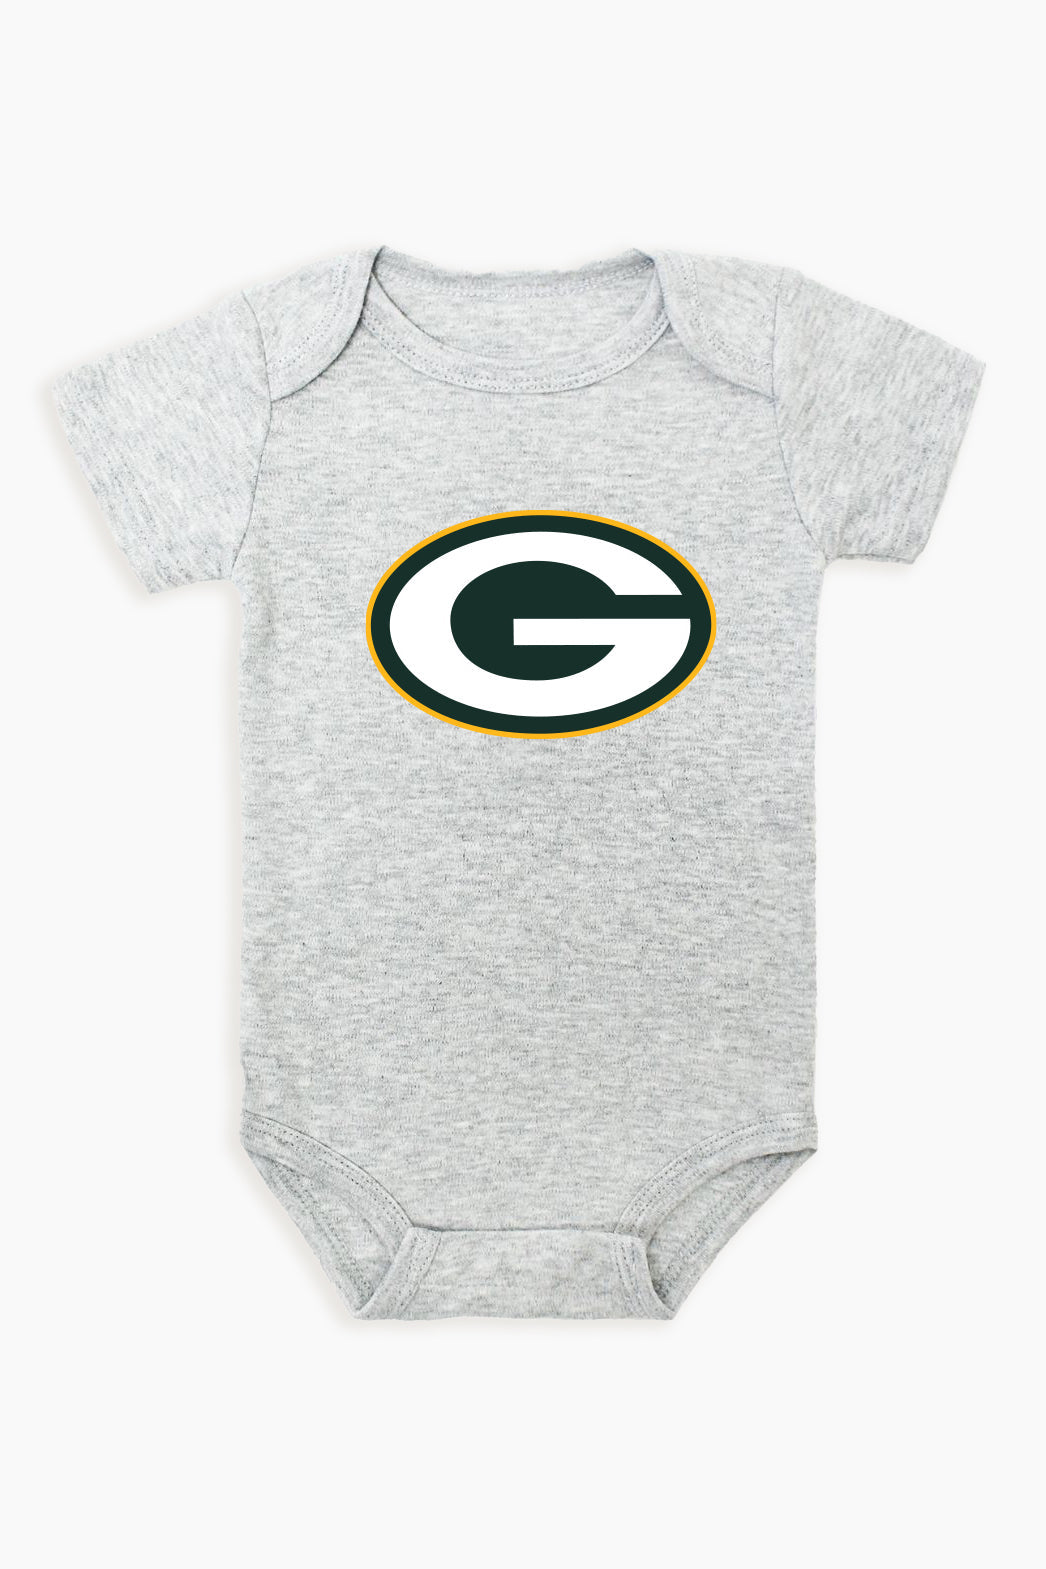 Gertex NFL Grey Baby Short-Sleeve Bodysuit - NFC Division